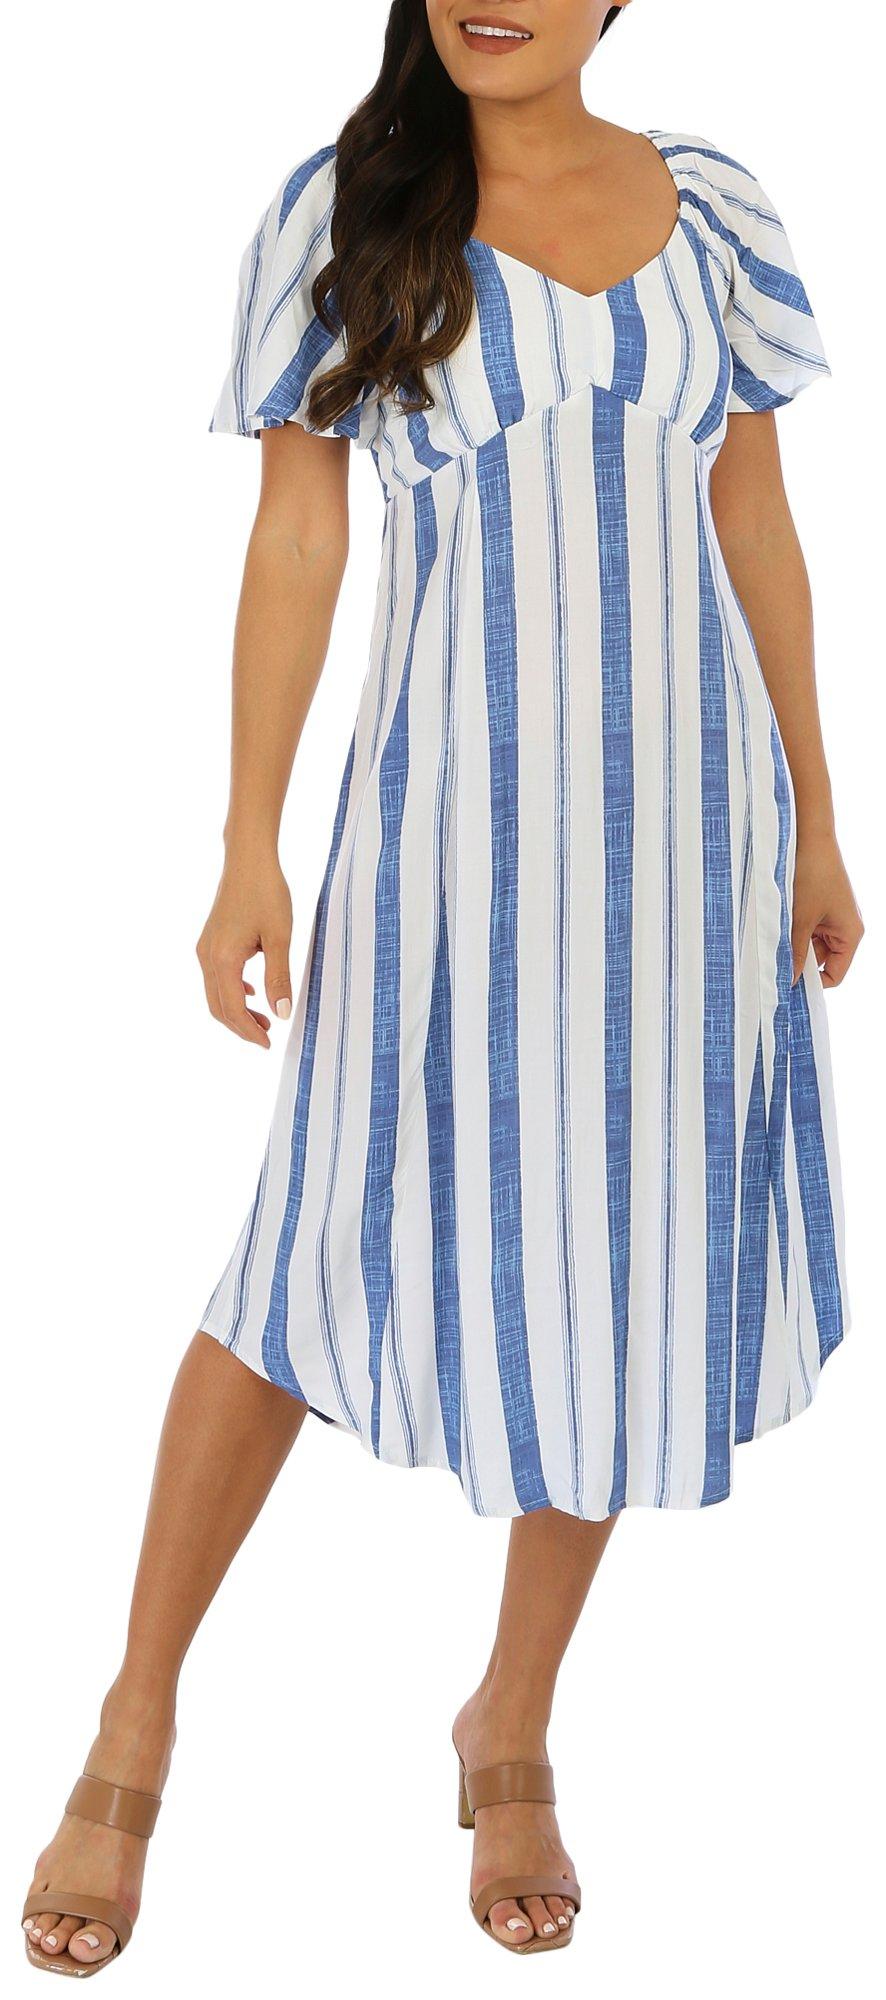 Womens Striped Short Sleeve Dress